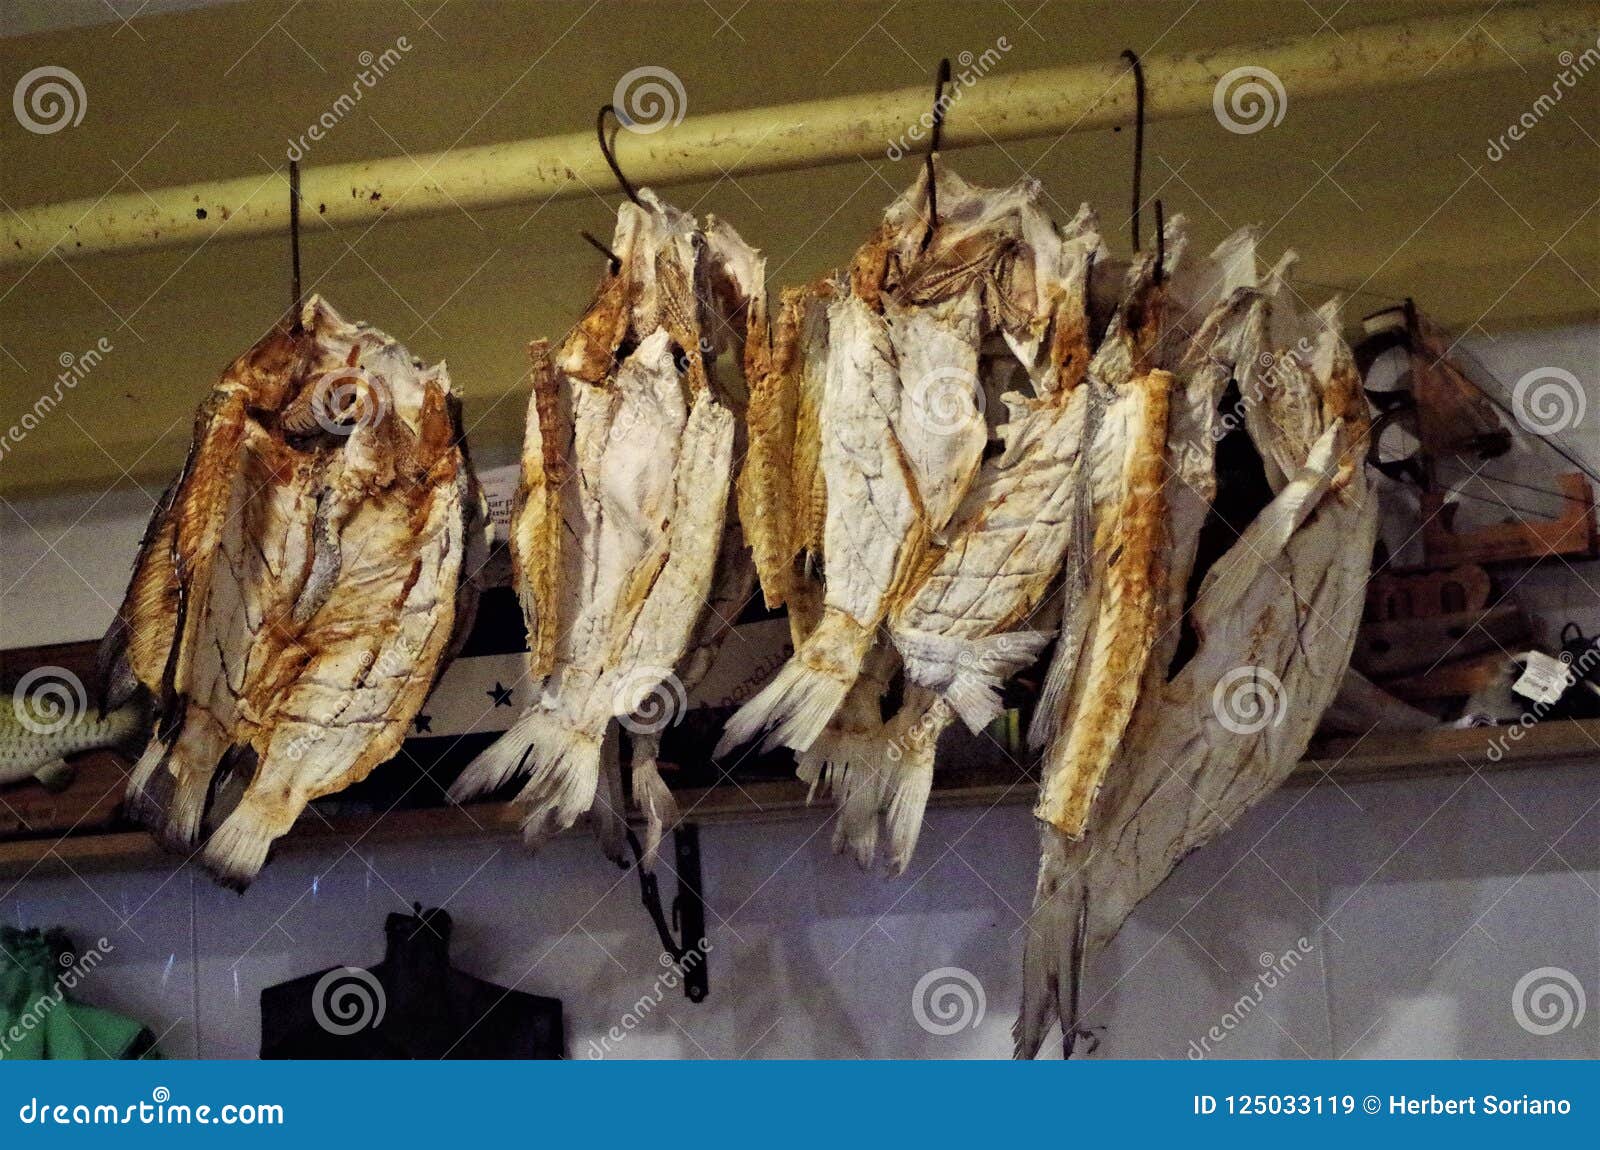 dry salty fish display on a traditional seamarket honduras